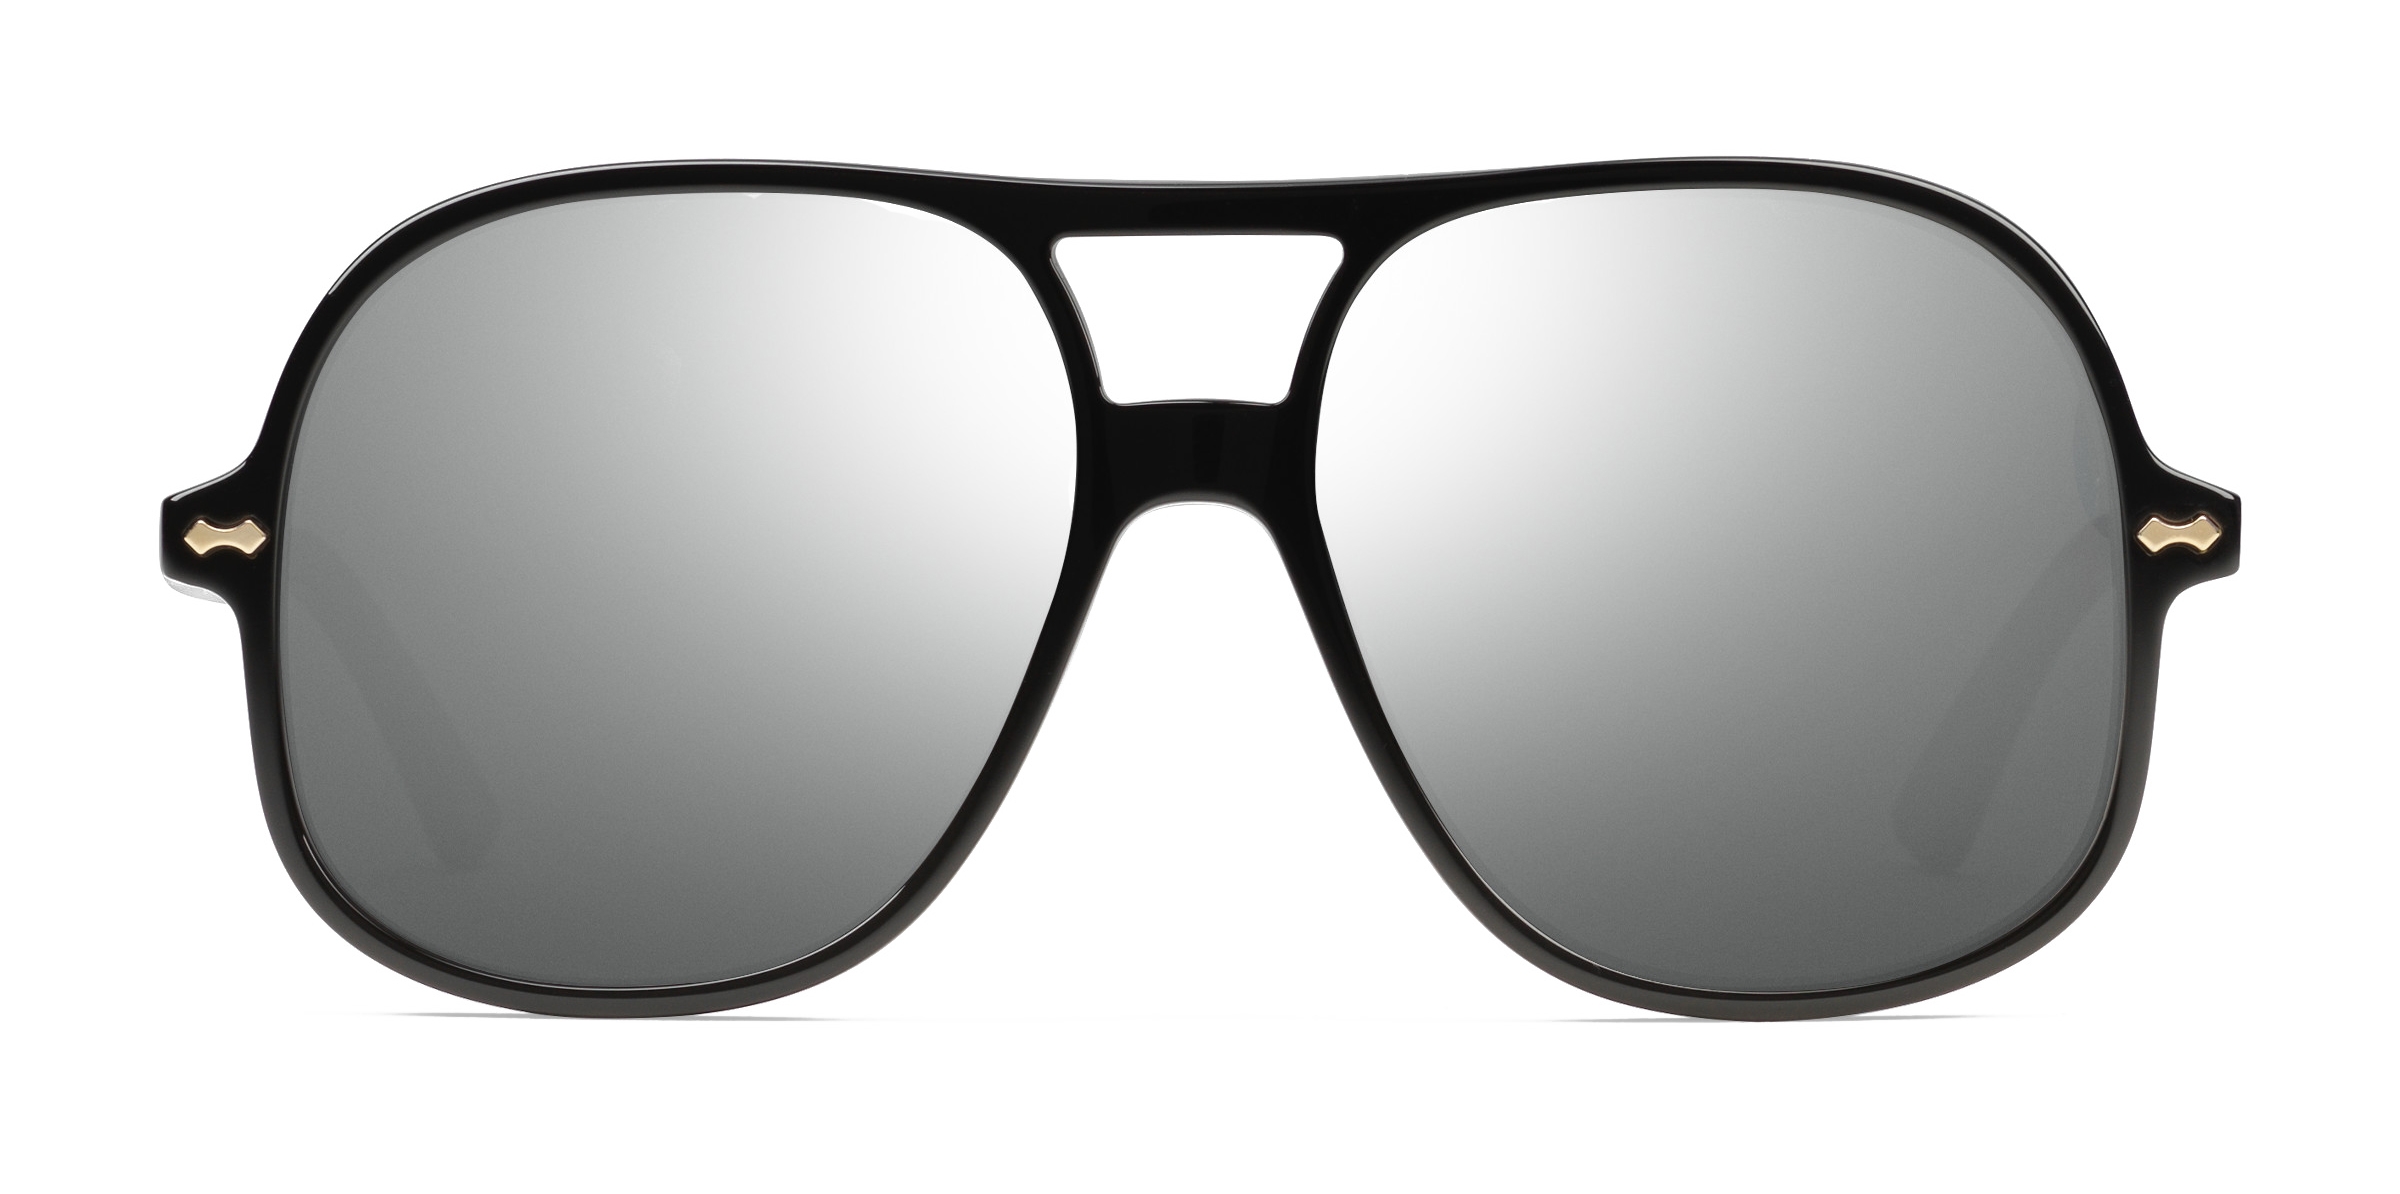 Gucci Aviator Acetate Sunglasses - Black - Gucci Eyewear - Avvenice